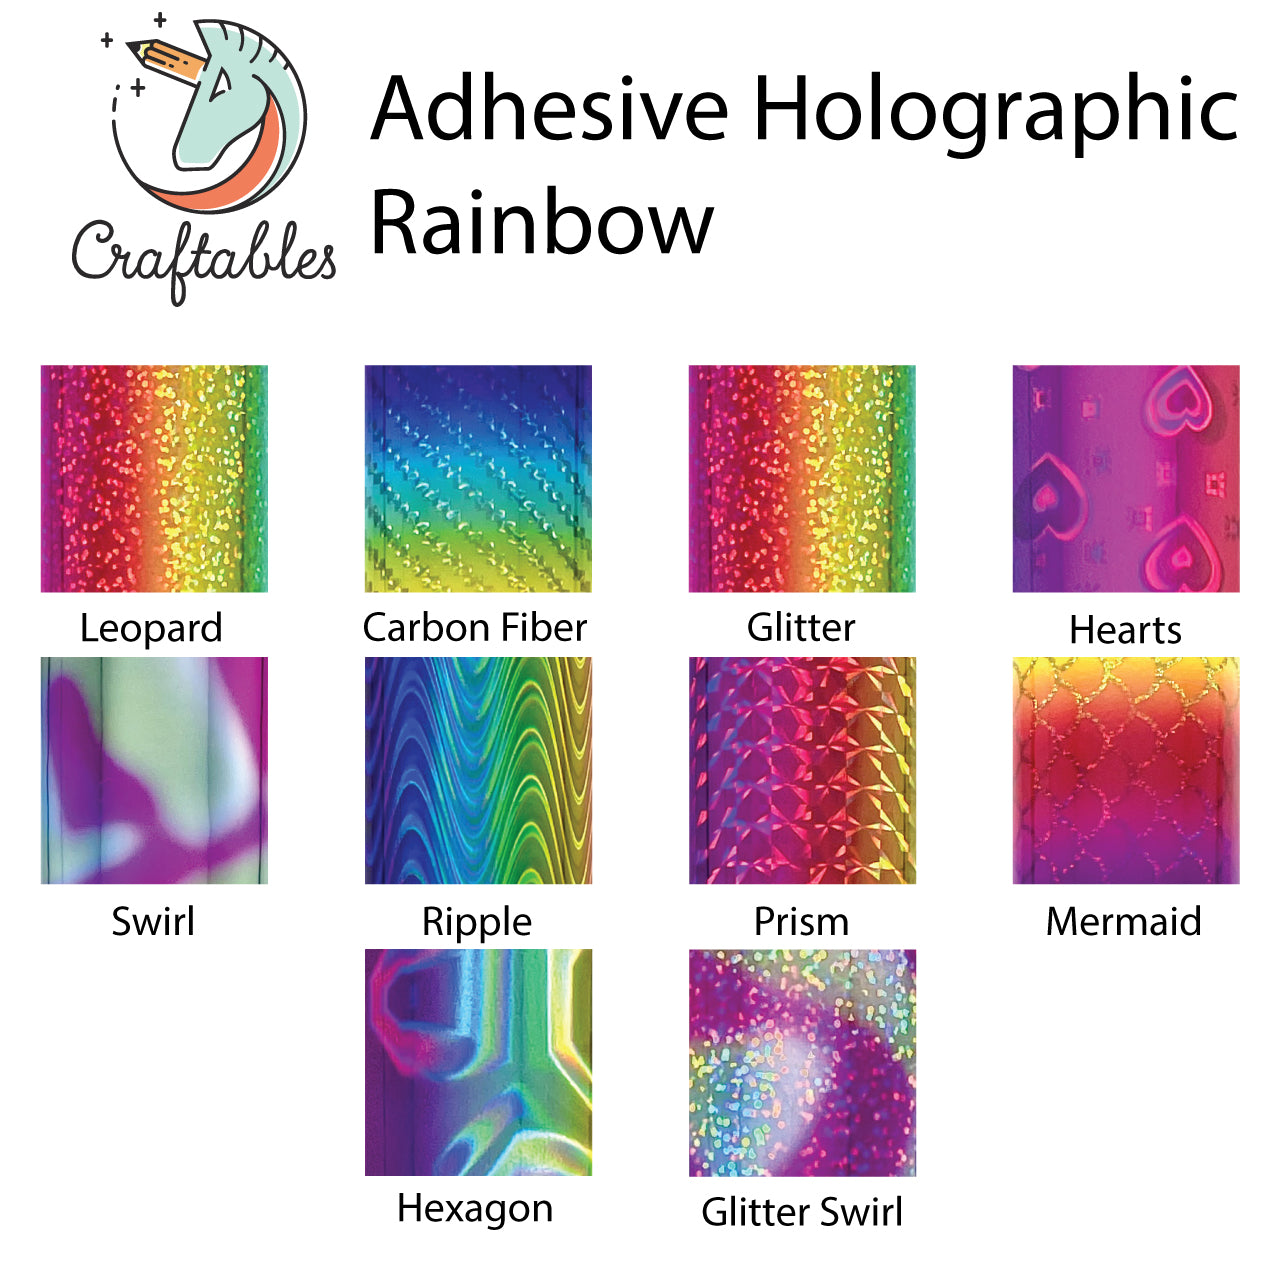 Glitter Swirl Rainbow Holographic Adhesive Vinyl Rolls By Craftables